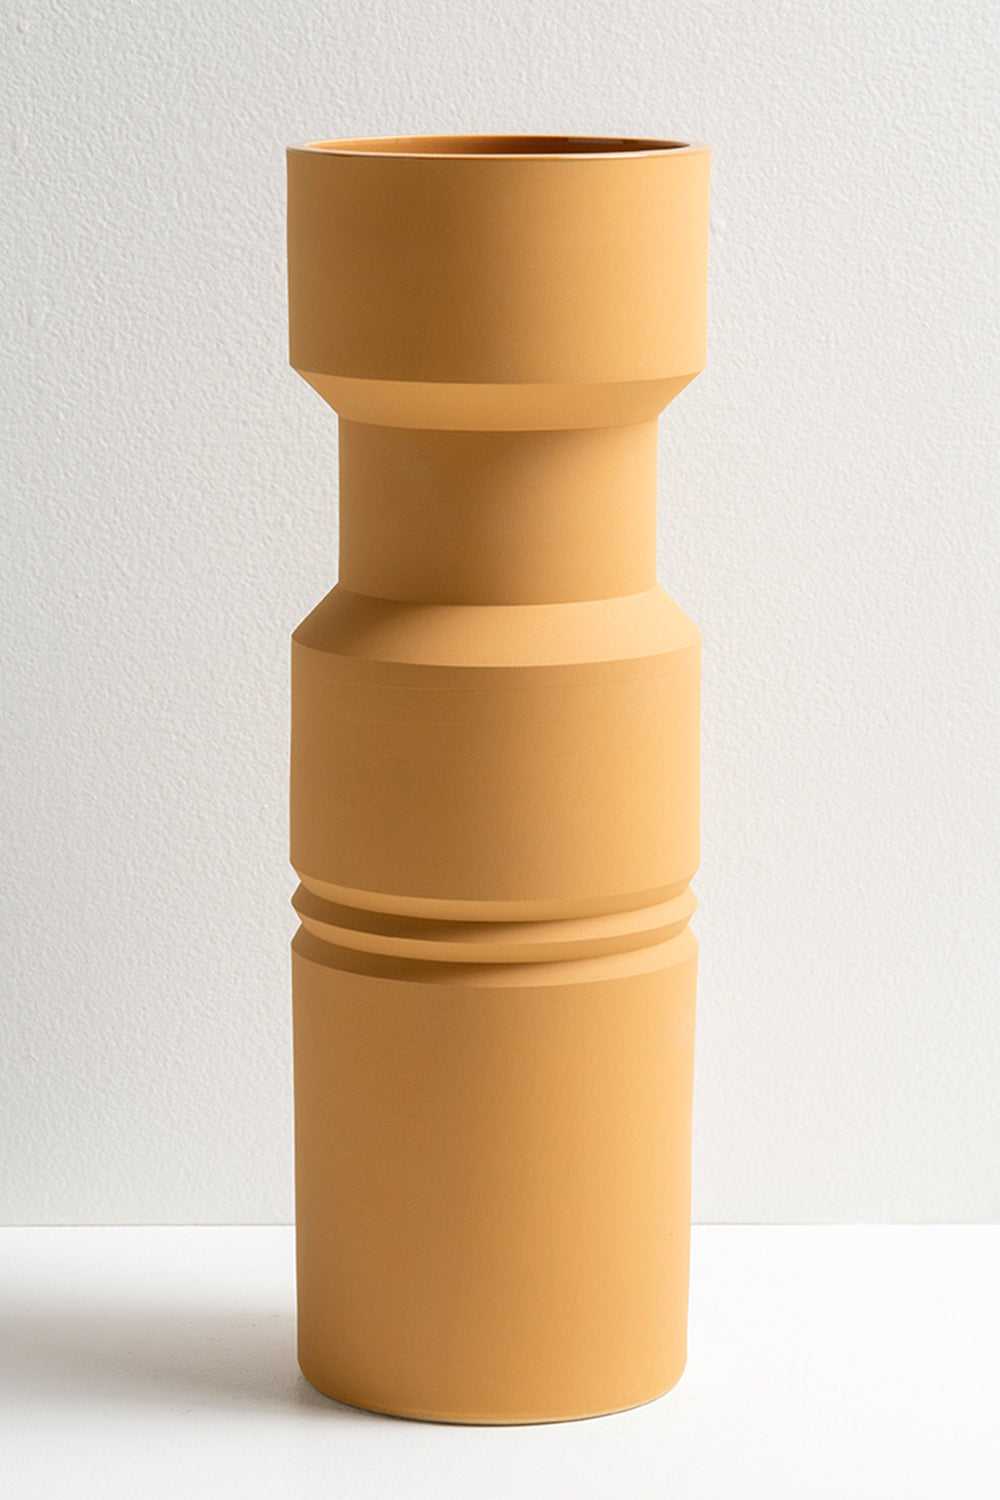 KAS - Miami Vase - Mustard